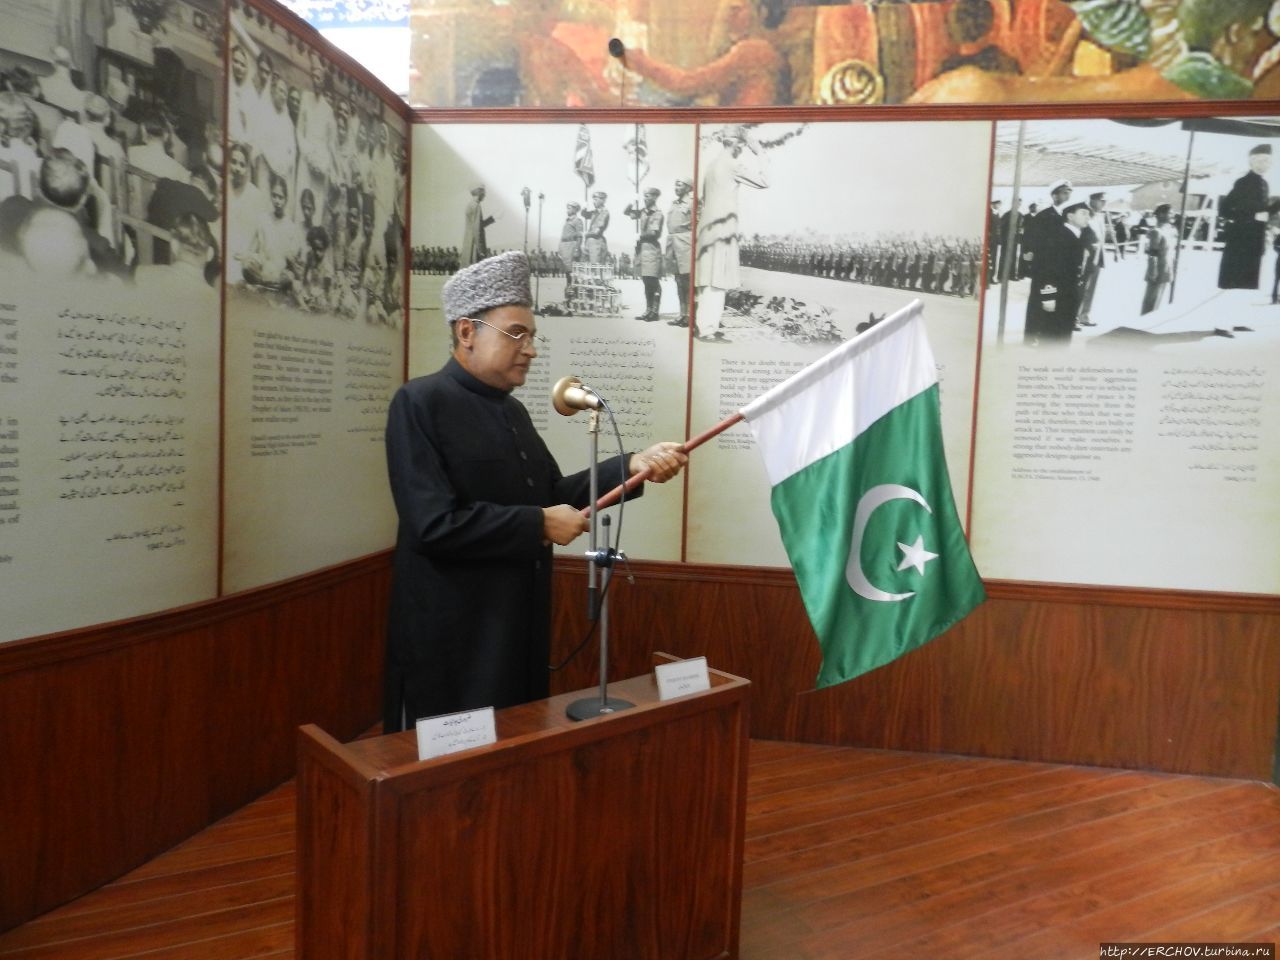 Пакистан.Ч-14. Первез Мушарраф и музей Пакистанский Монумент Исламабад, Пакистан